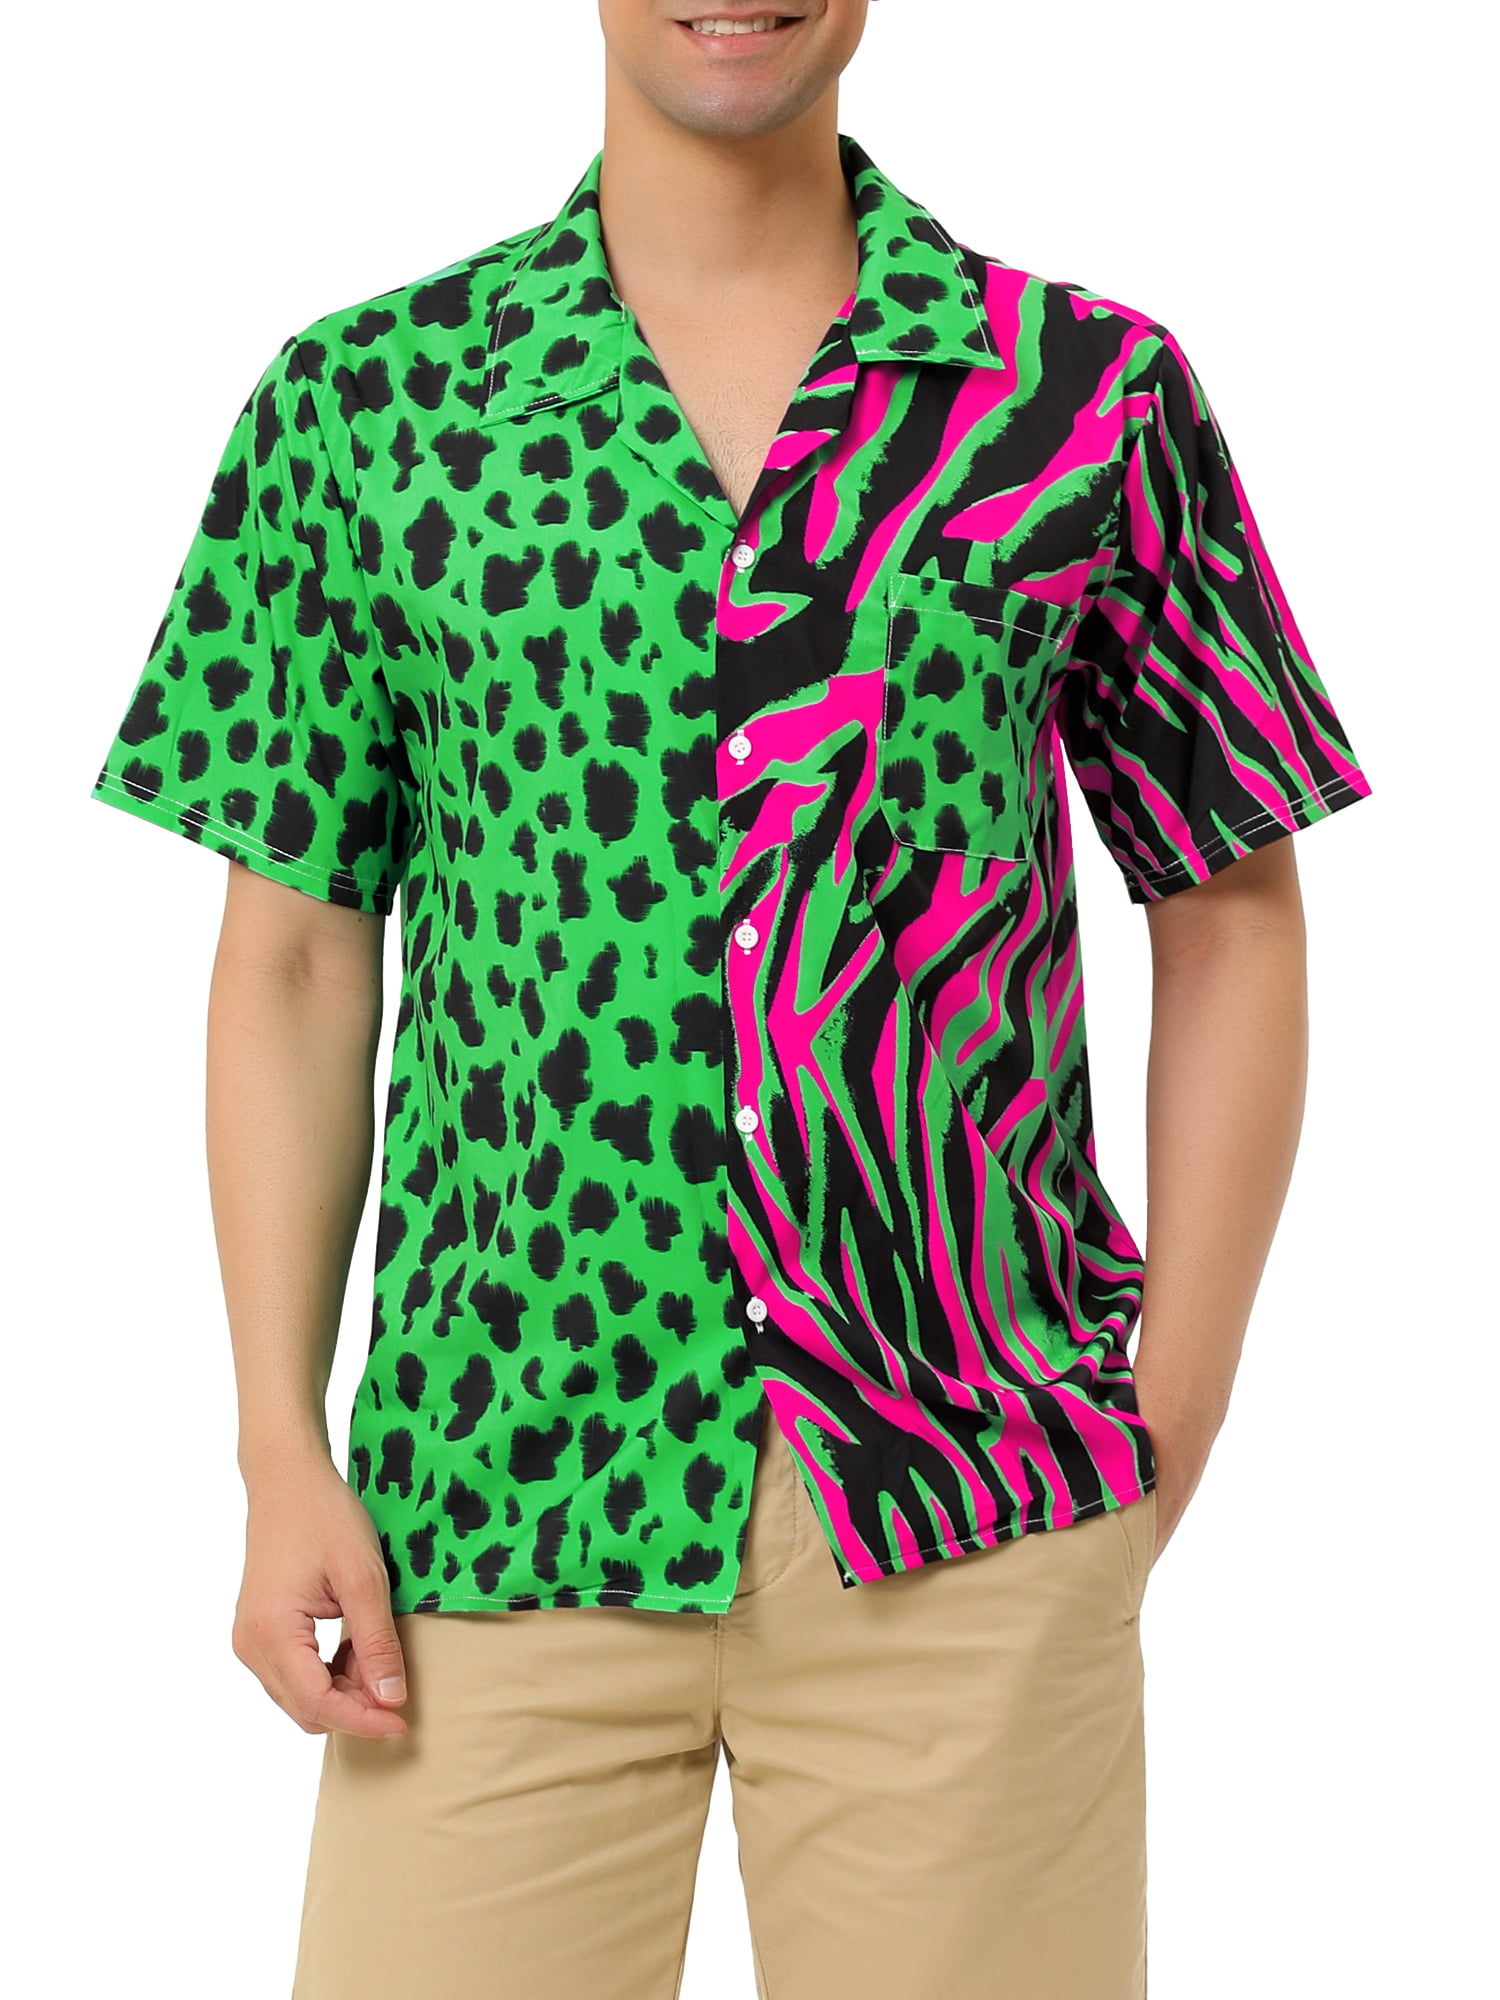 Lars Amadeus Big & Tall Men's Leopard Print Color Block Patchwork Shirts